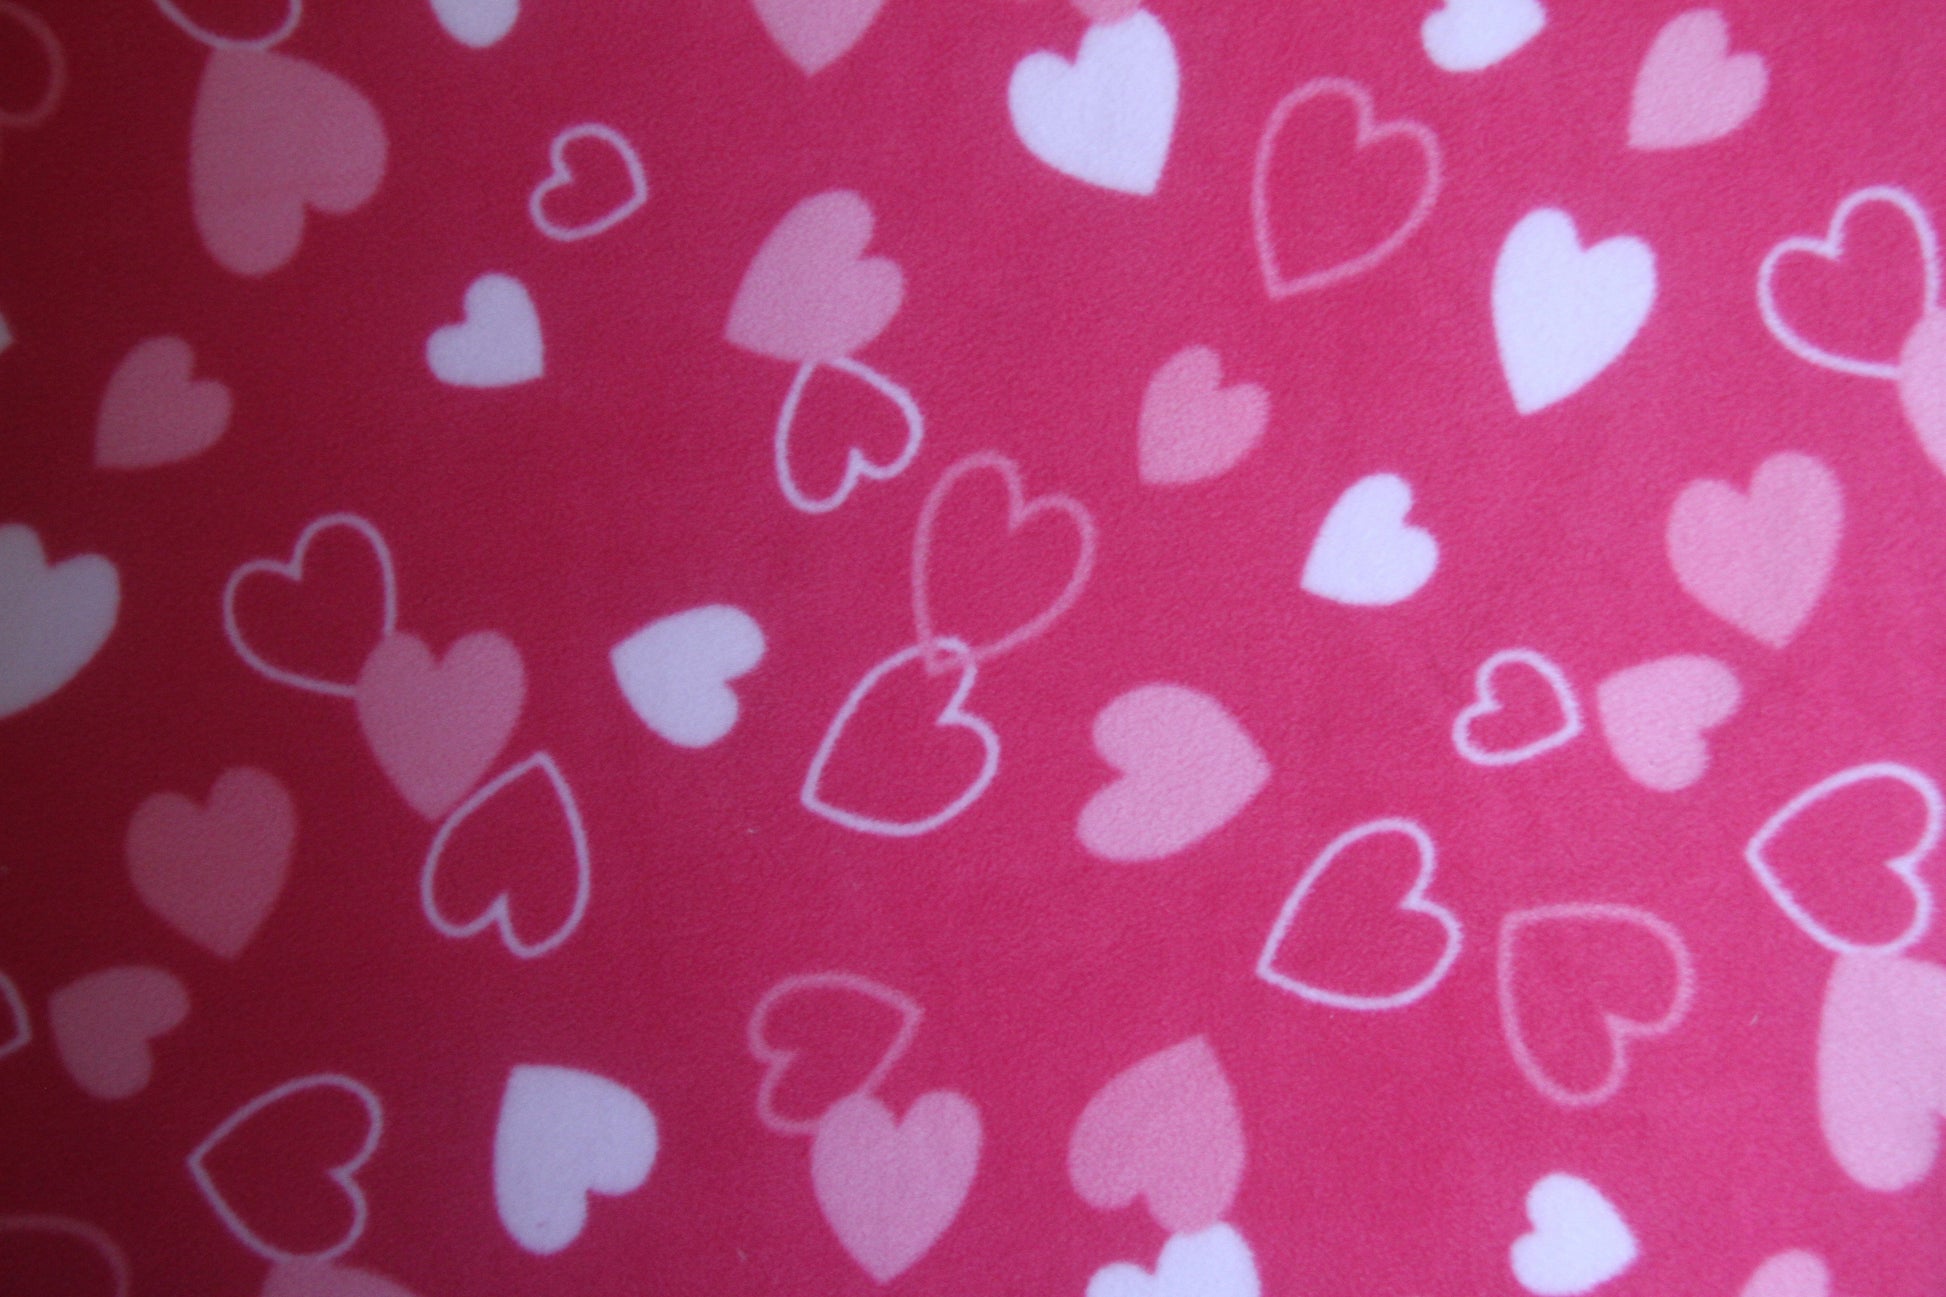 Love Hearts  -  Pink